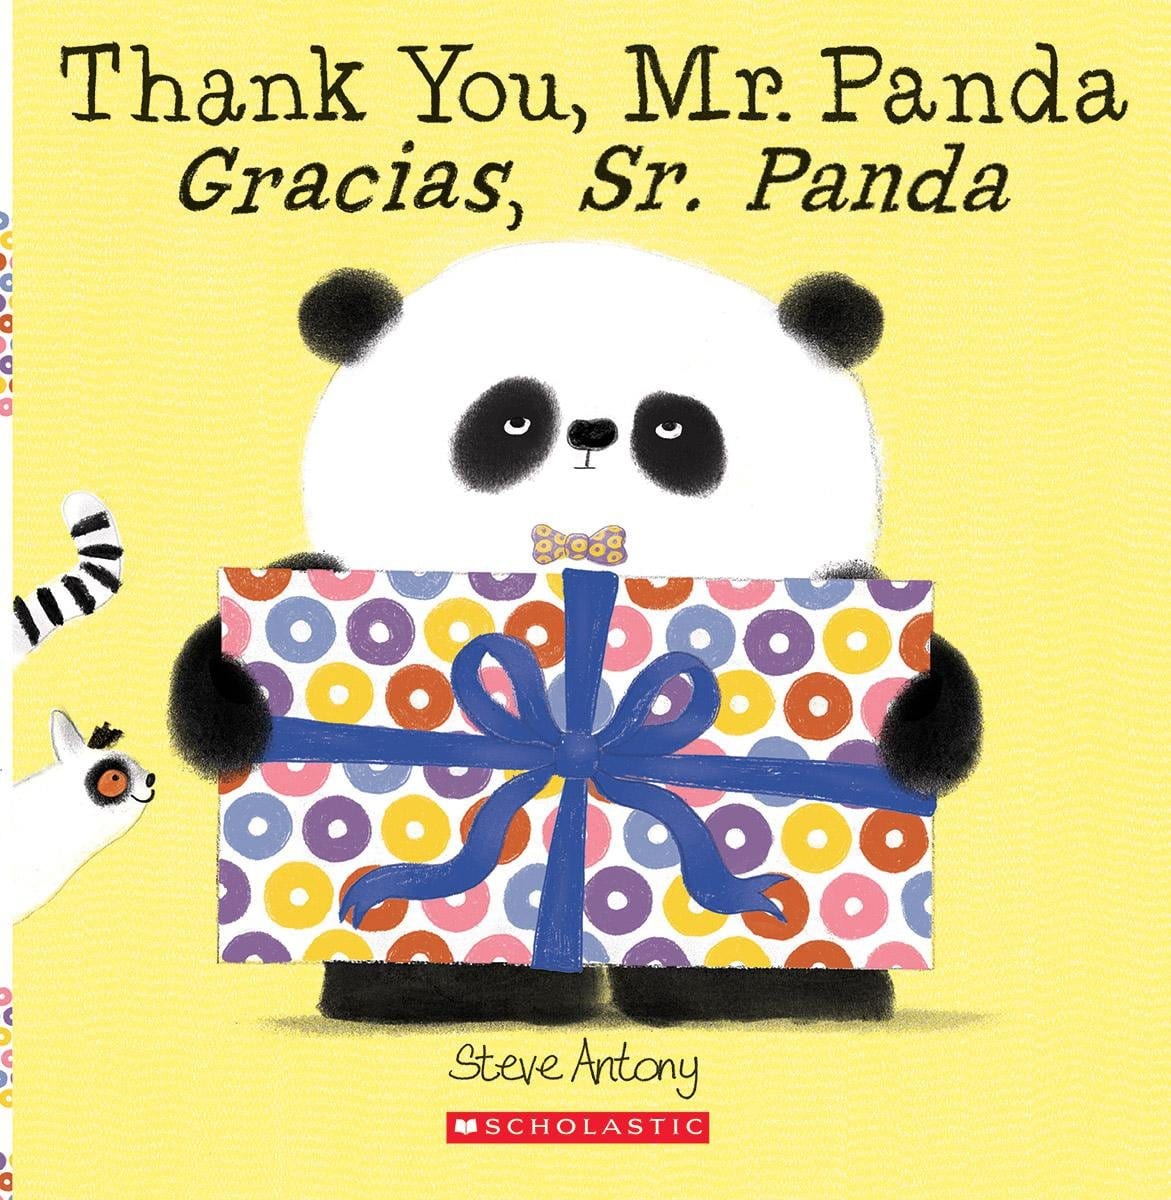 scholastic Thank you, Mr. Panda - Gracias, Sr. Panda